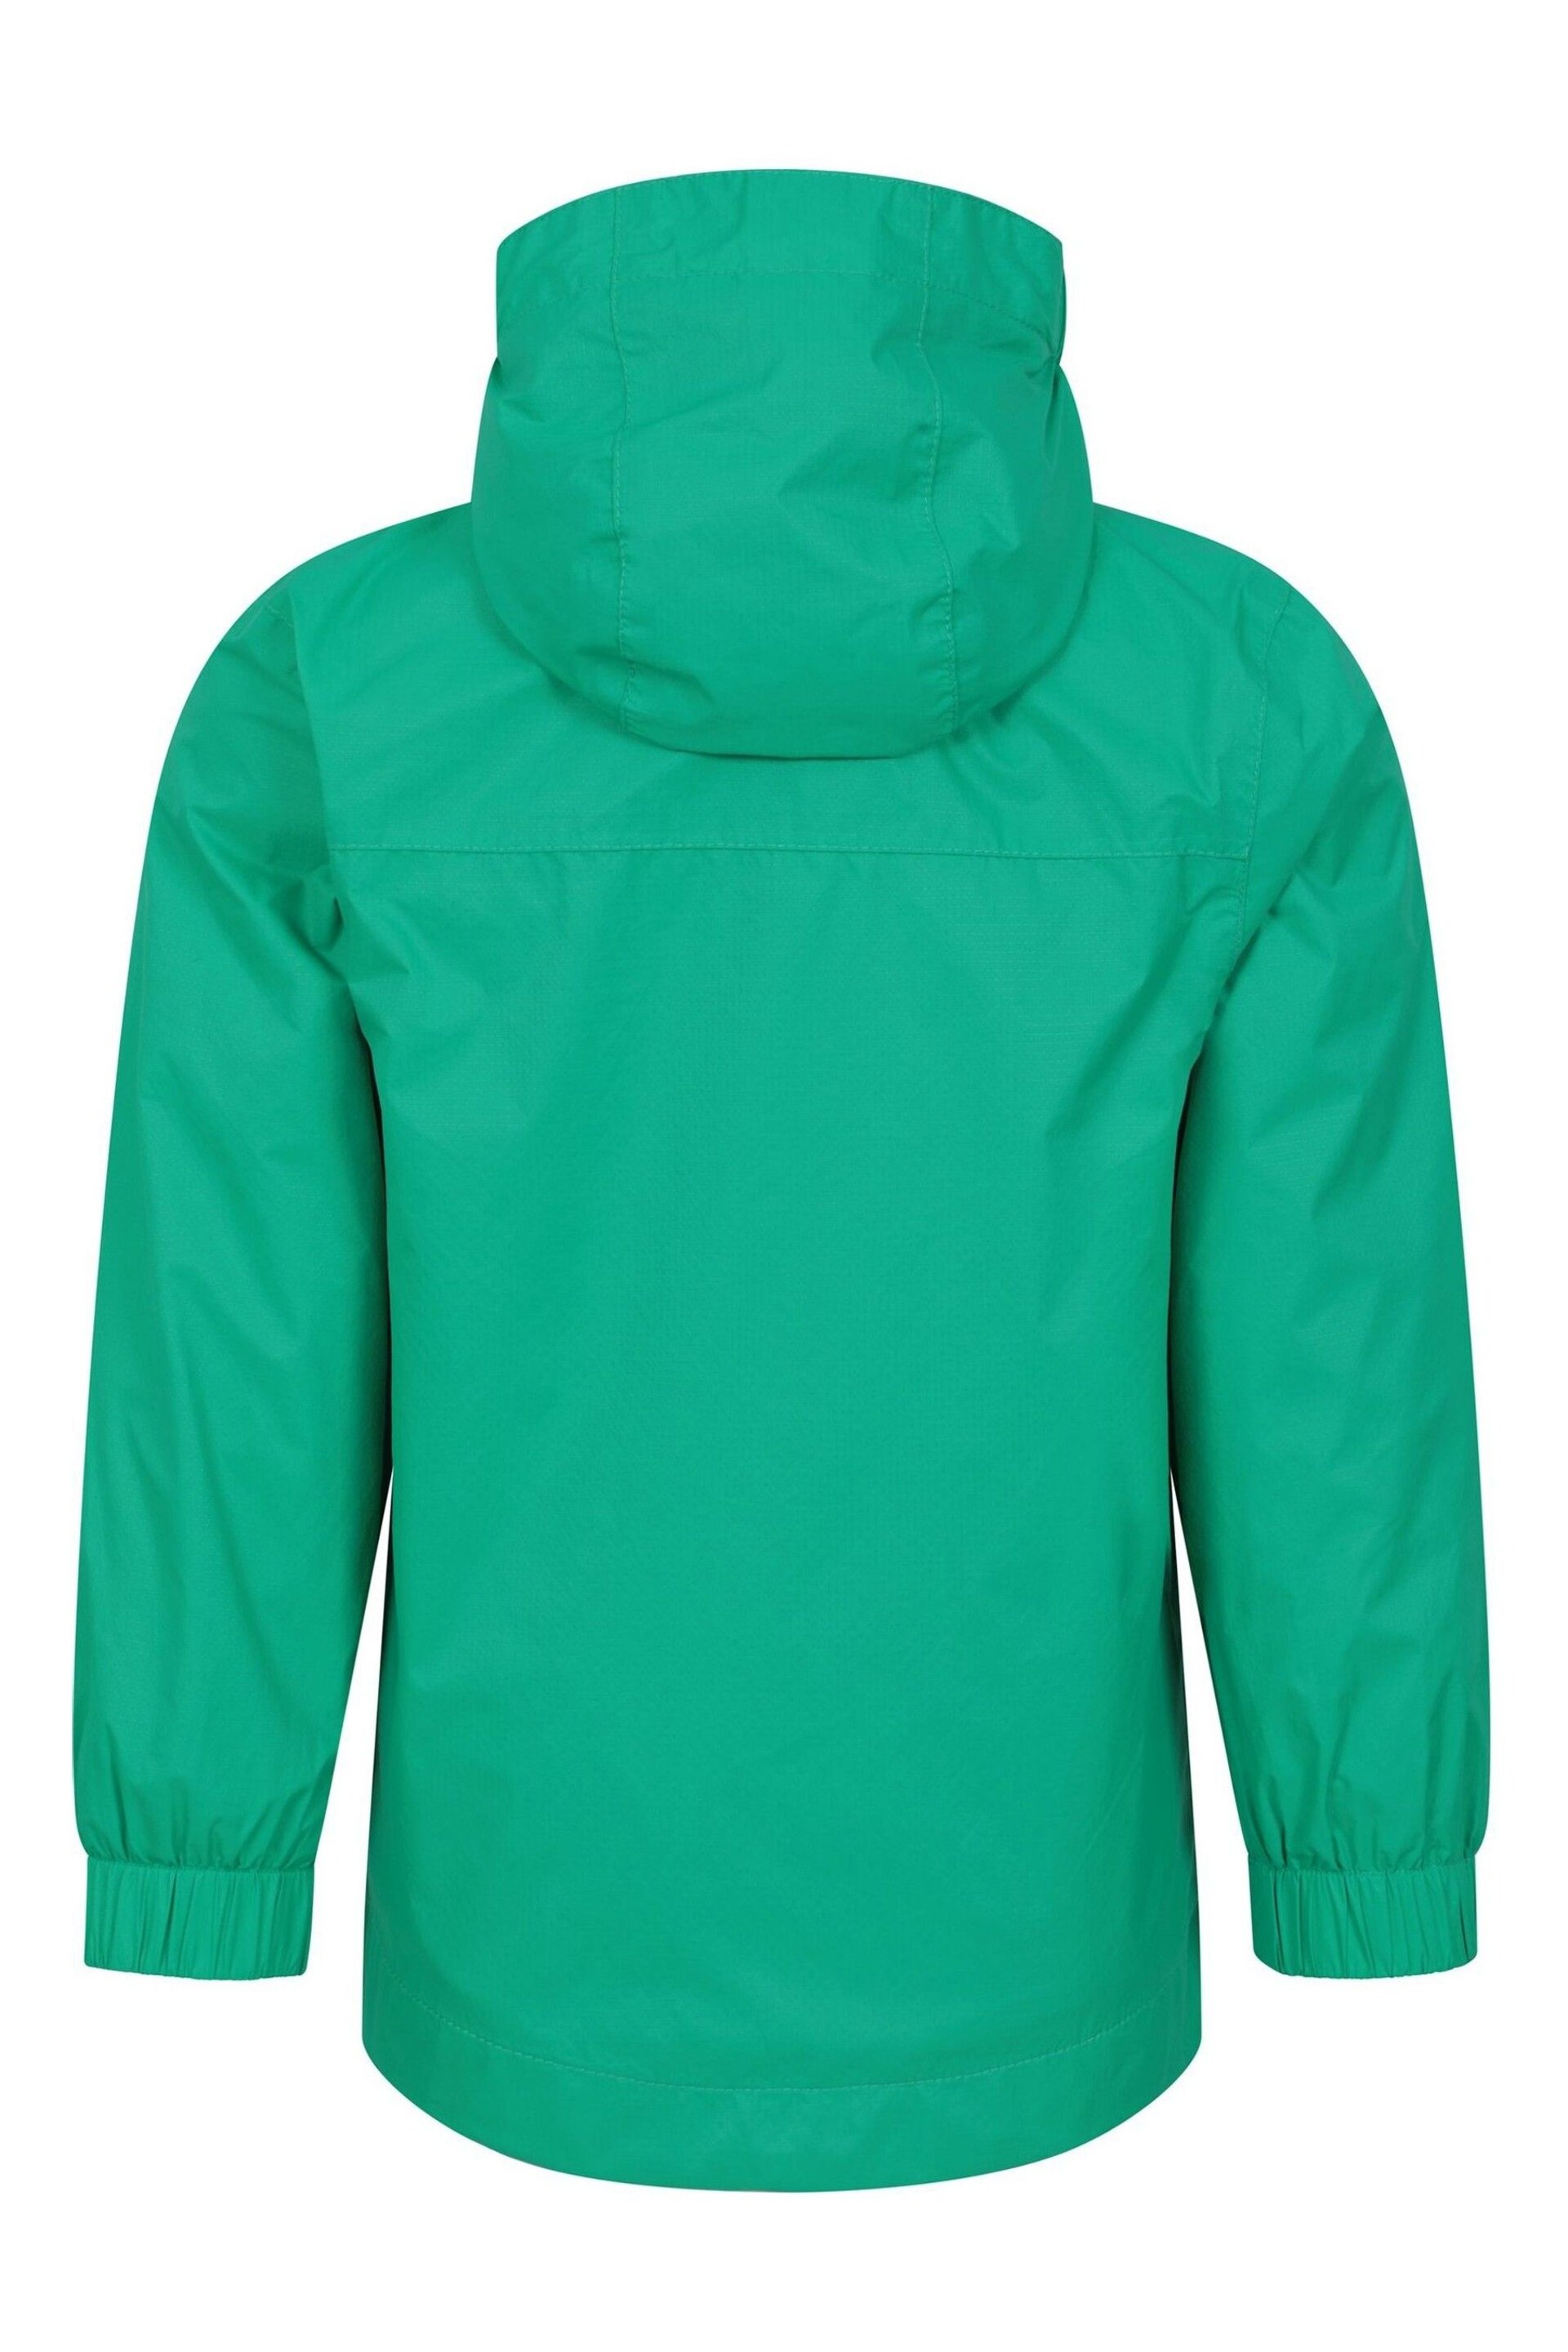 Mountain Warehouse Green Kids Torrent Waterproof Jacket - Image 4 of 5